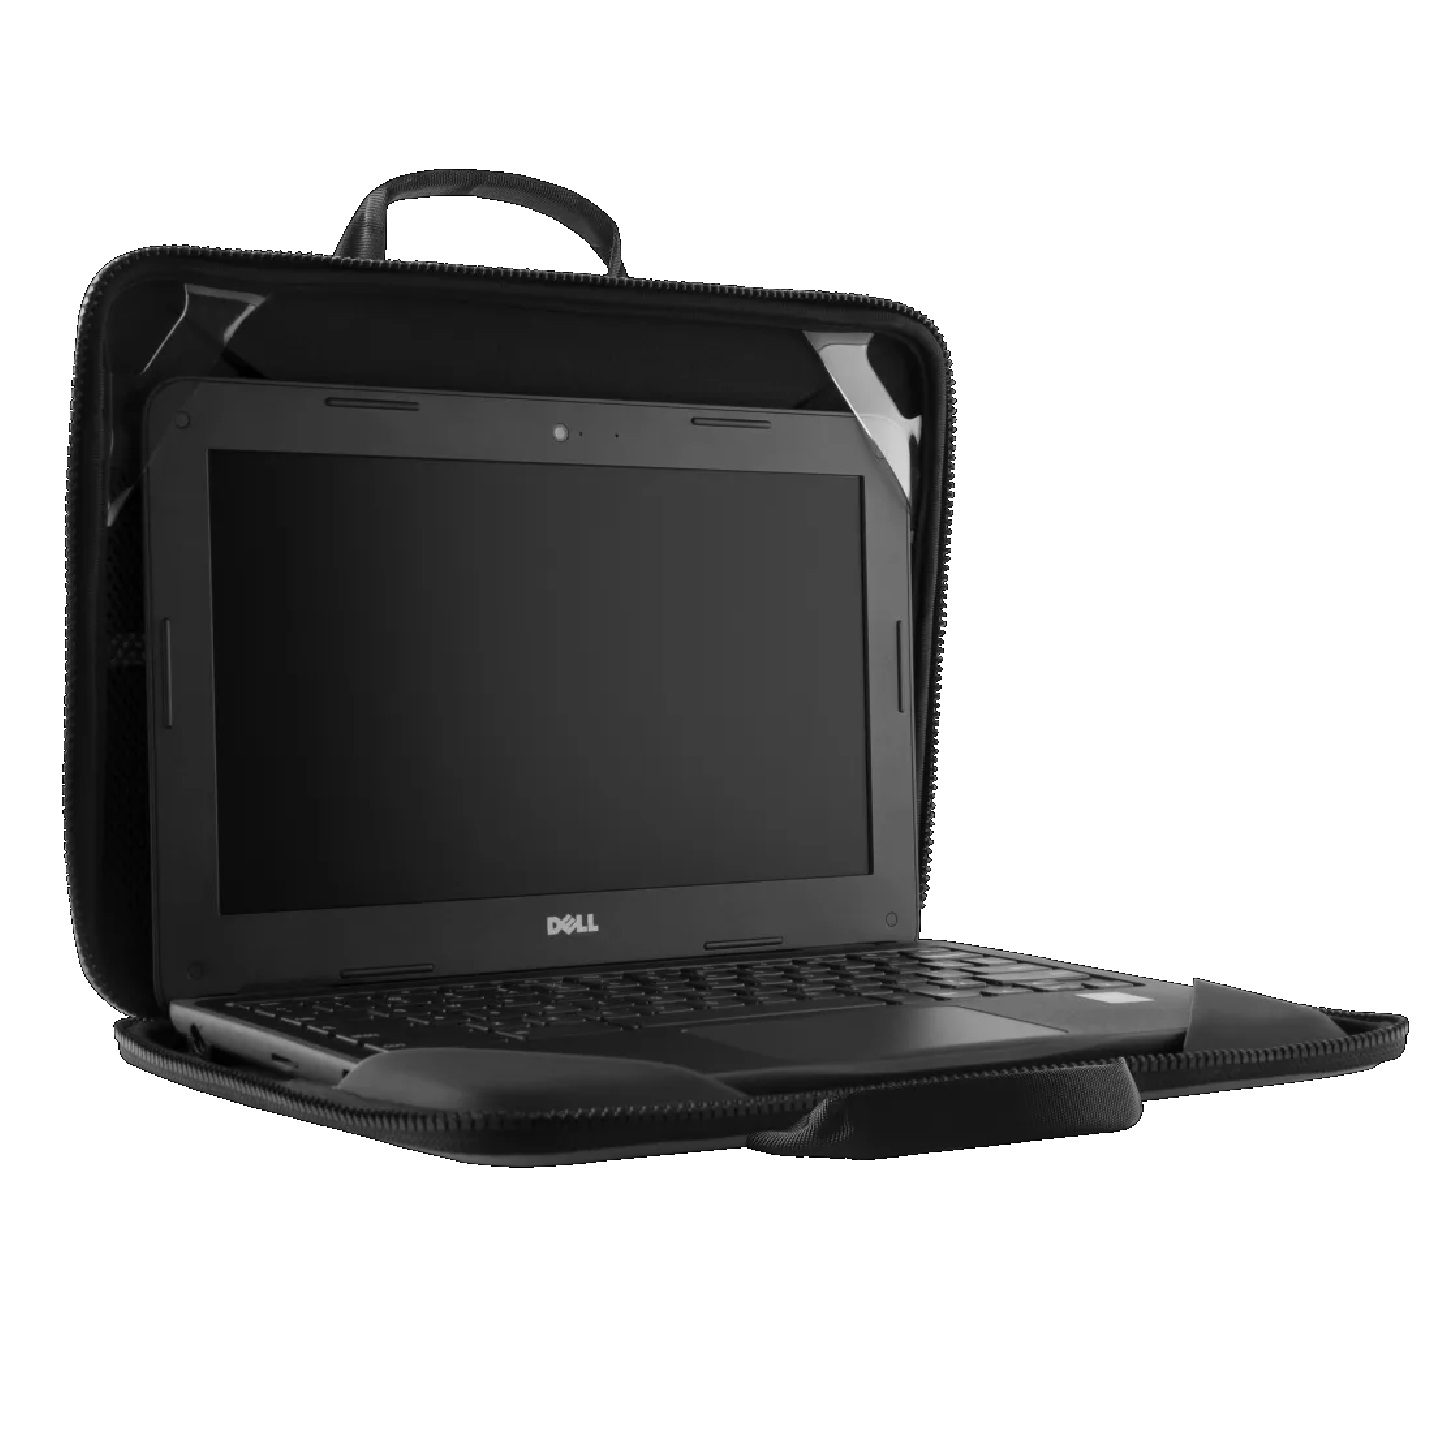 UAG Medium Sleeve with Handle Fits 13" Laptops/Tablets - Black (982800114040), DROP+ Military Standard, Tactical Grip, Wear-Resistant,Mesh Pocket